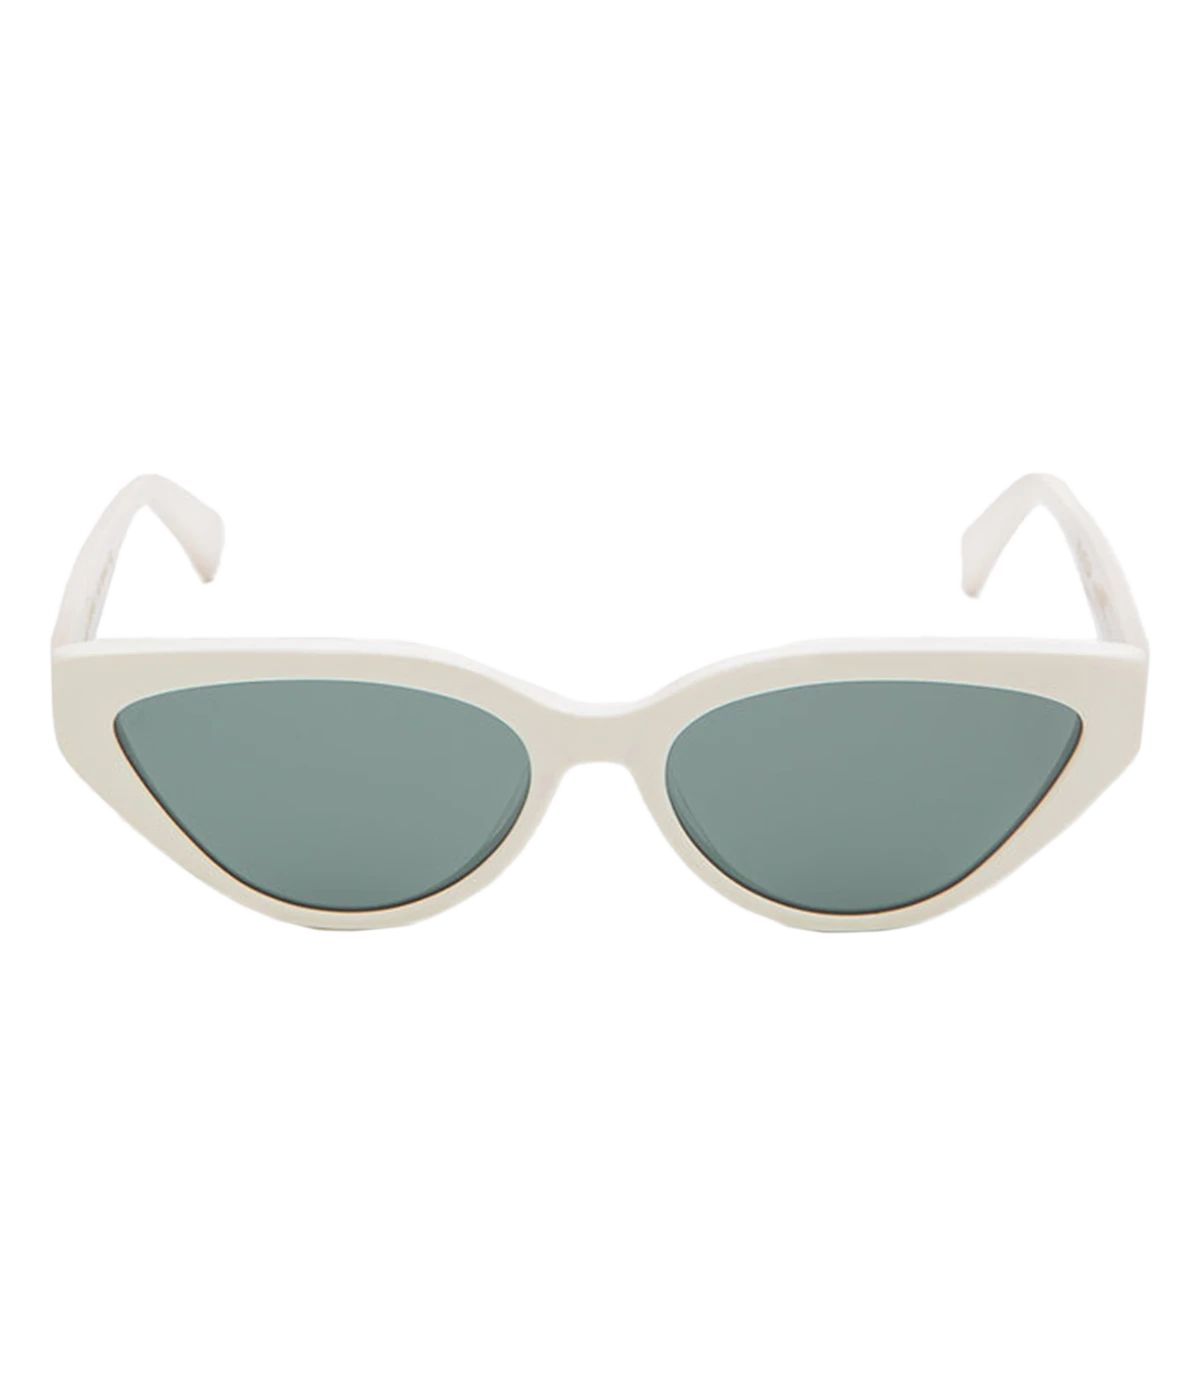 Saint Tropez Sunglasses in White & Green